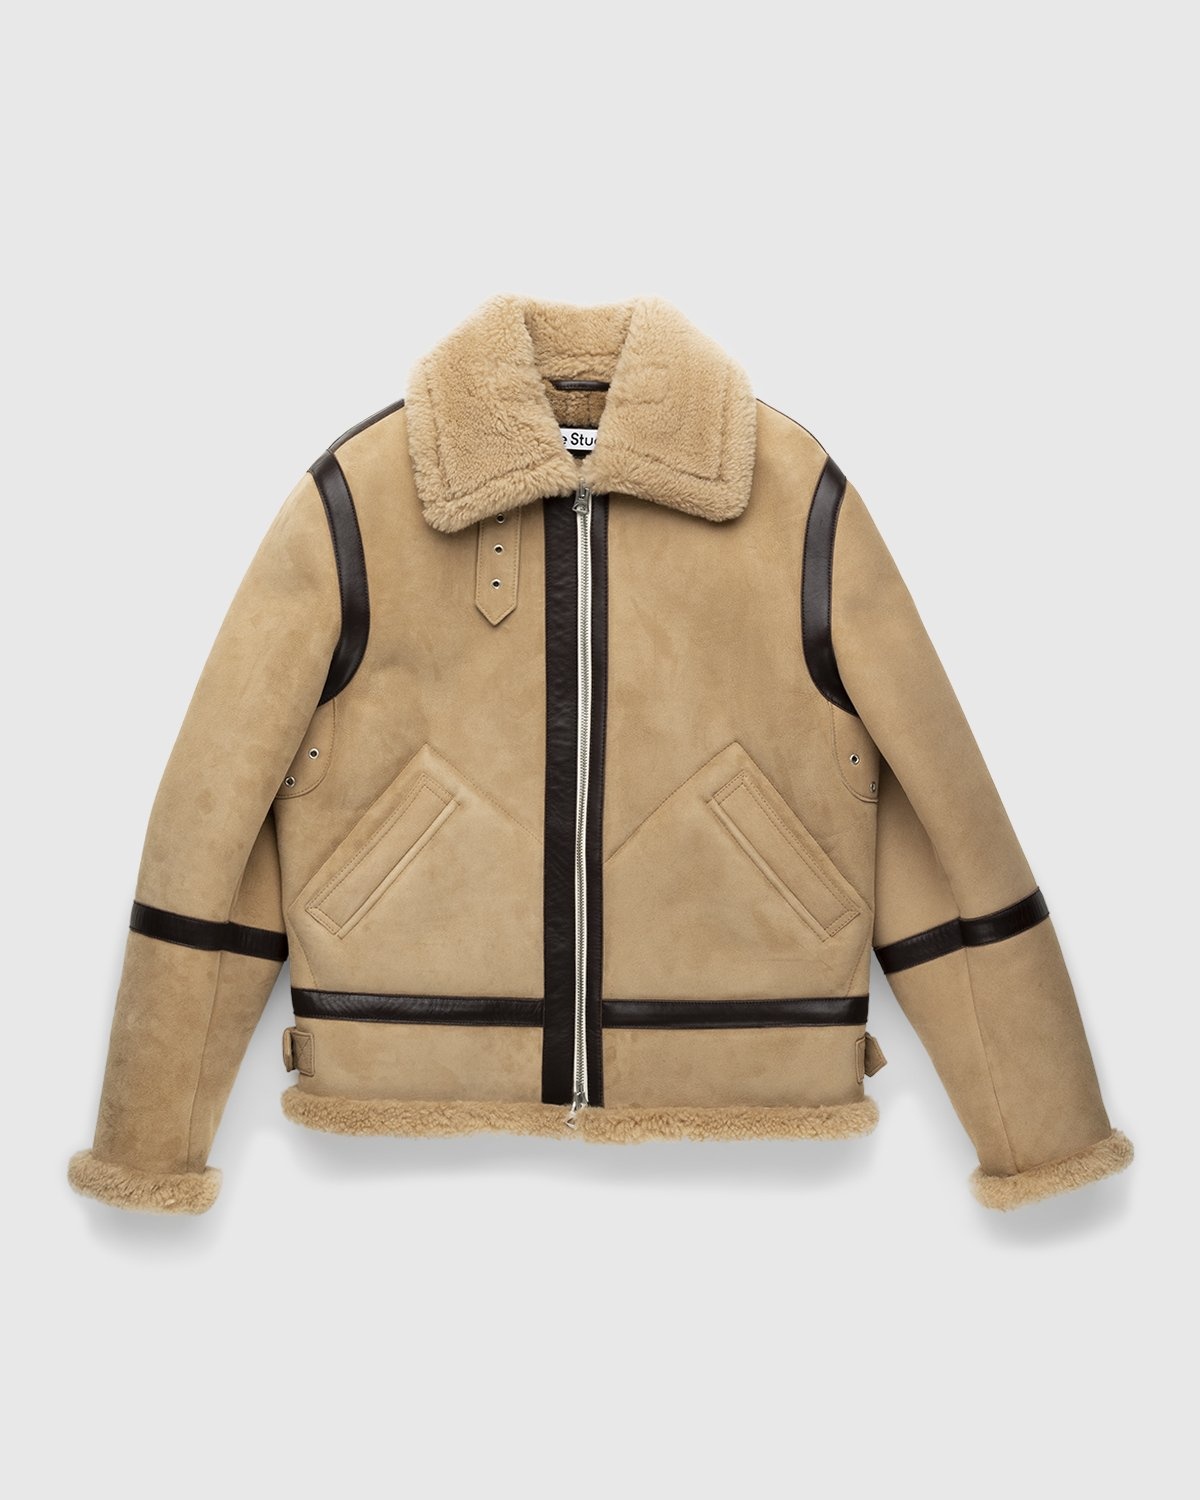 Acne Studios – Shearling Leather Jacket Almond Beige - Outerwear - Beige - Image 1